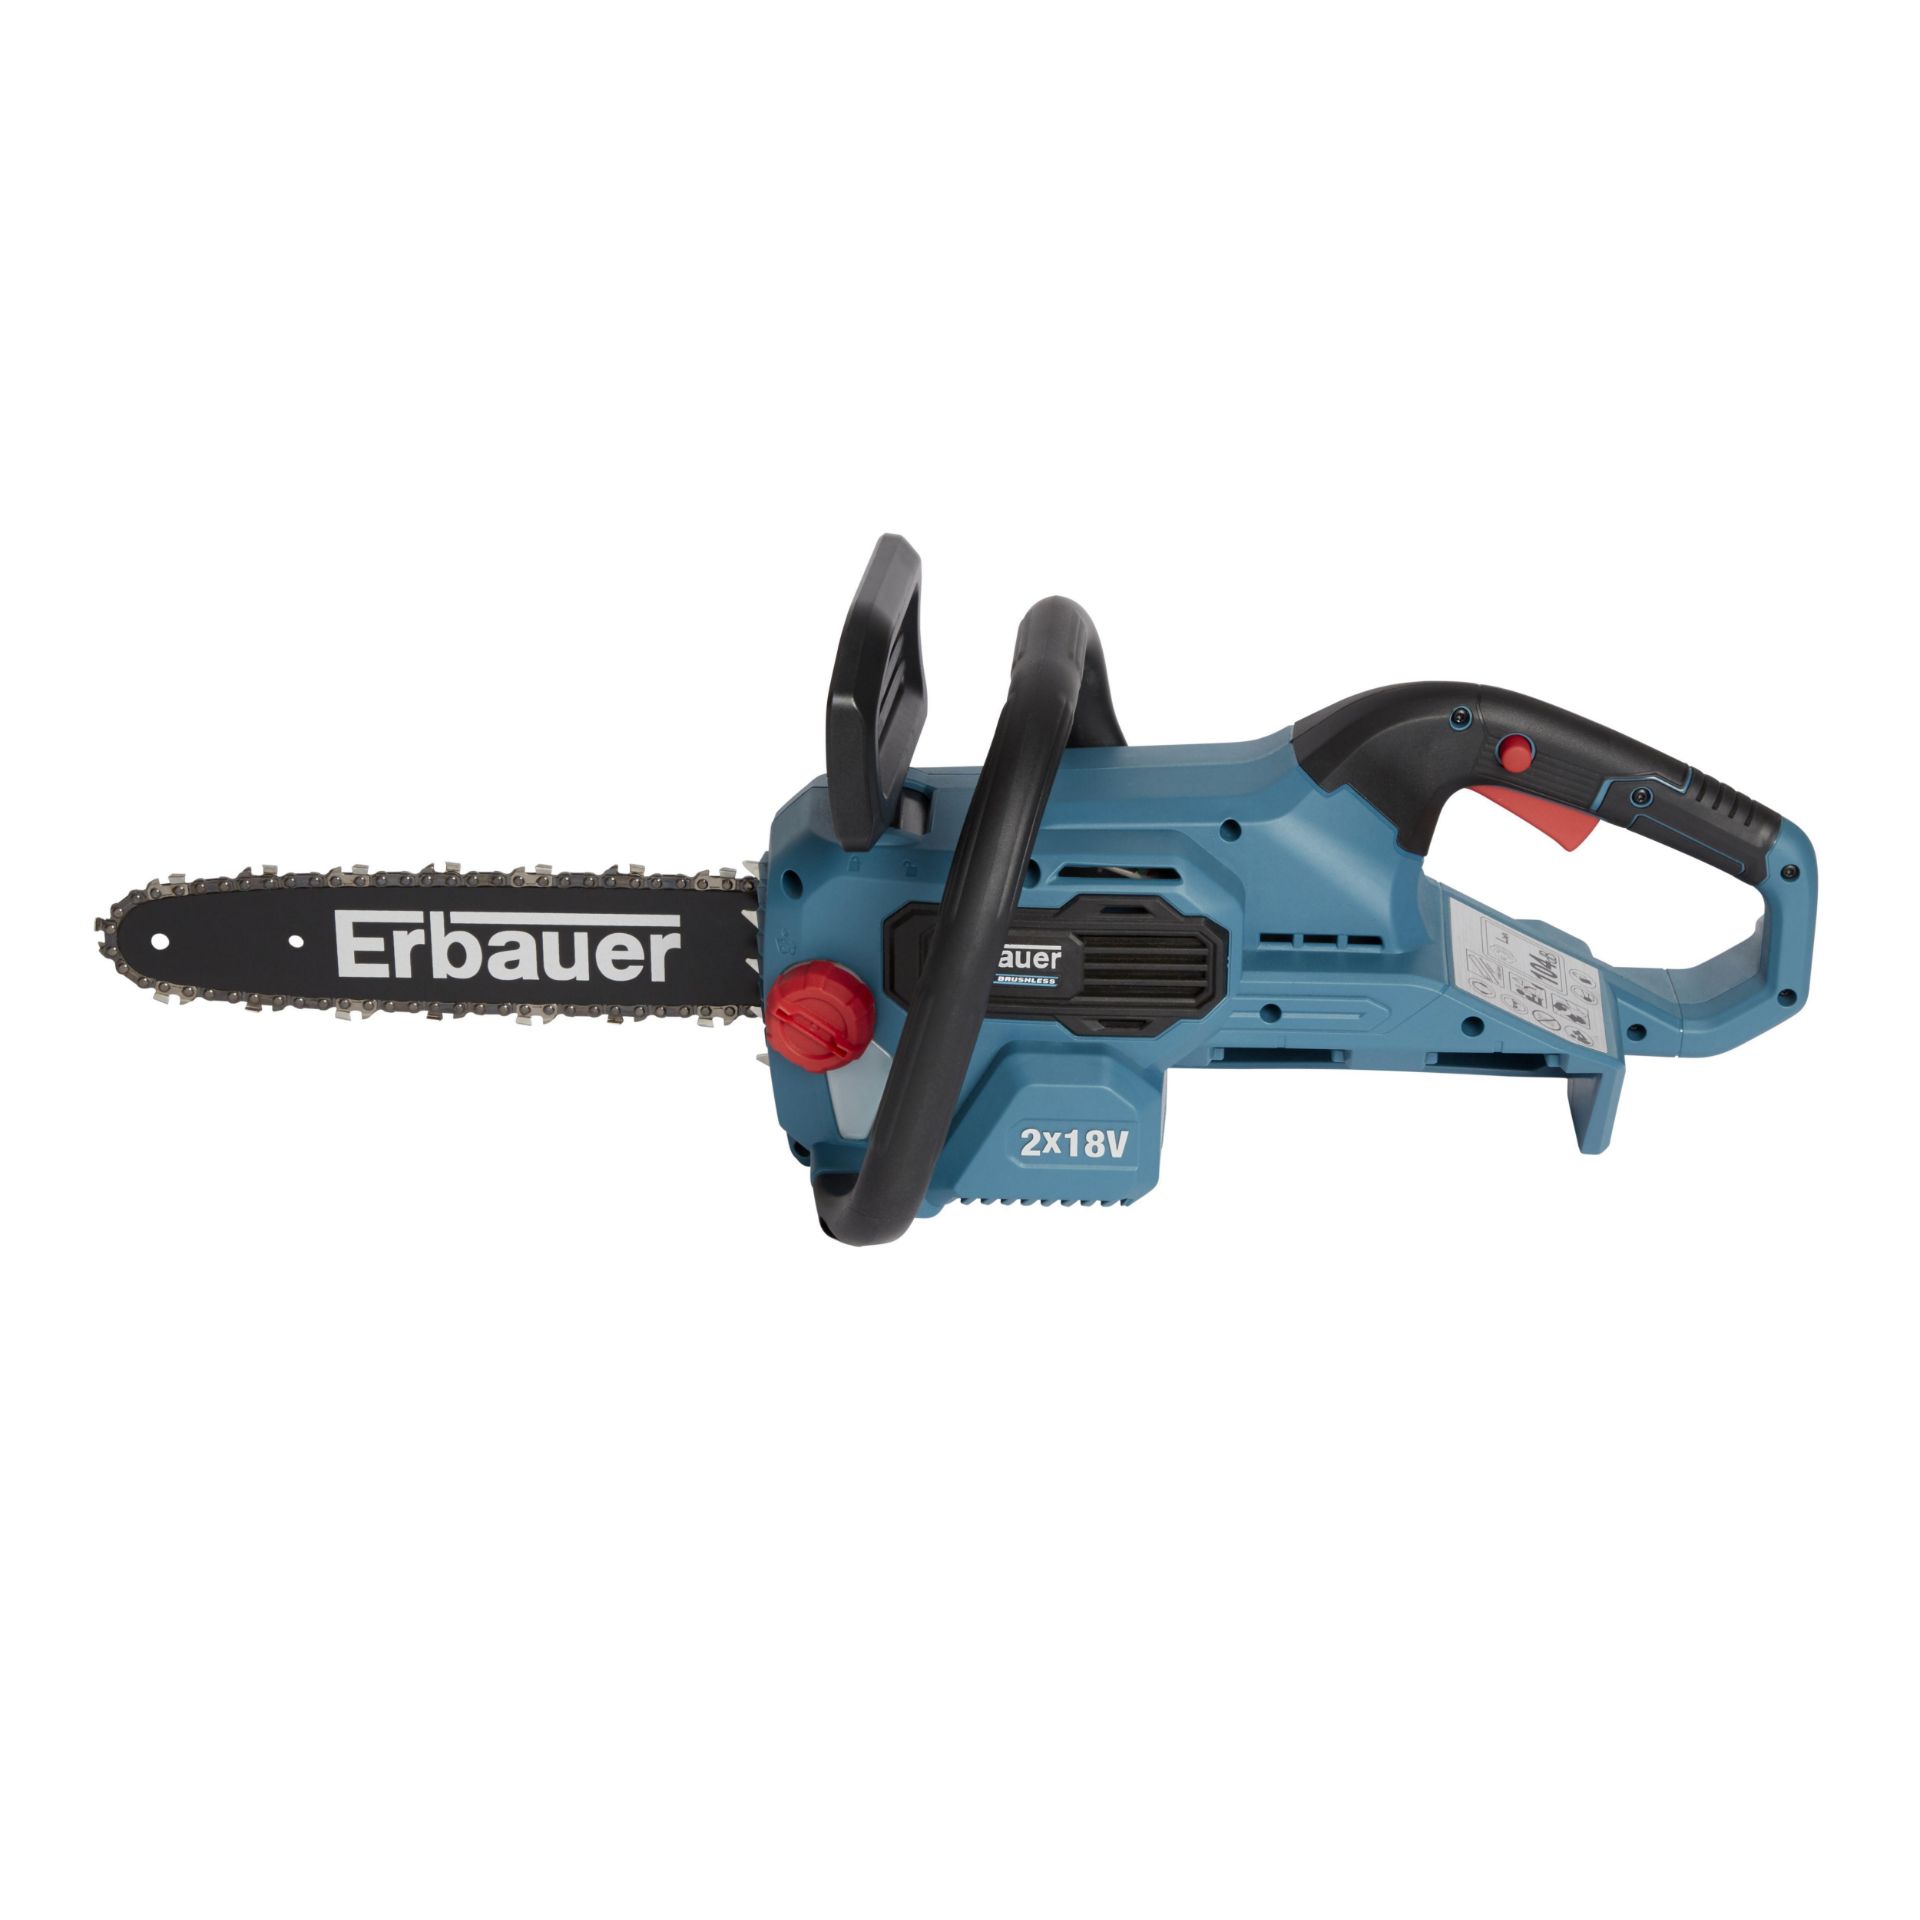 Erbauer Ecsg18-Li 18V Cordless 300mm Chainsaw (LOCATION - H/S 1.1.2) This cordless chainsaw is